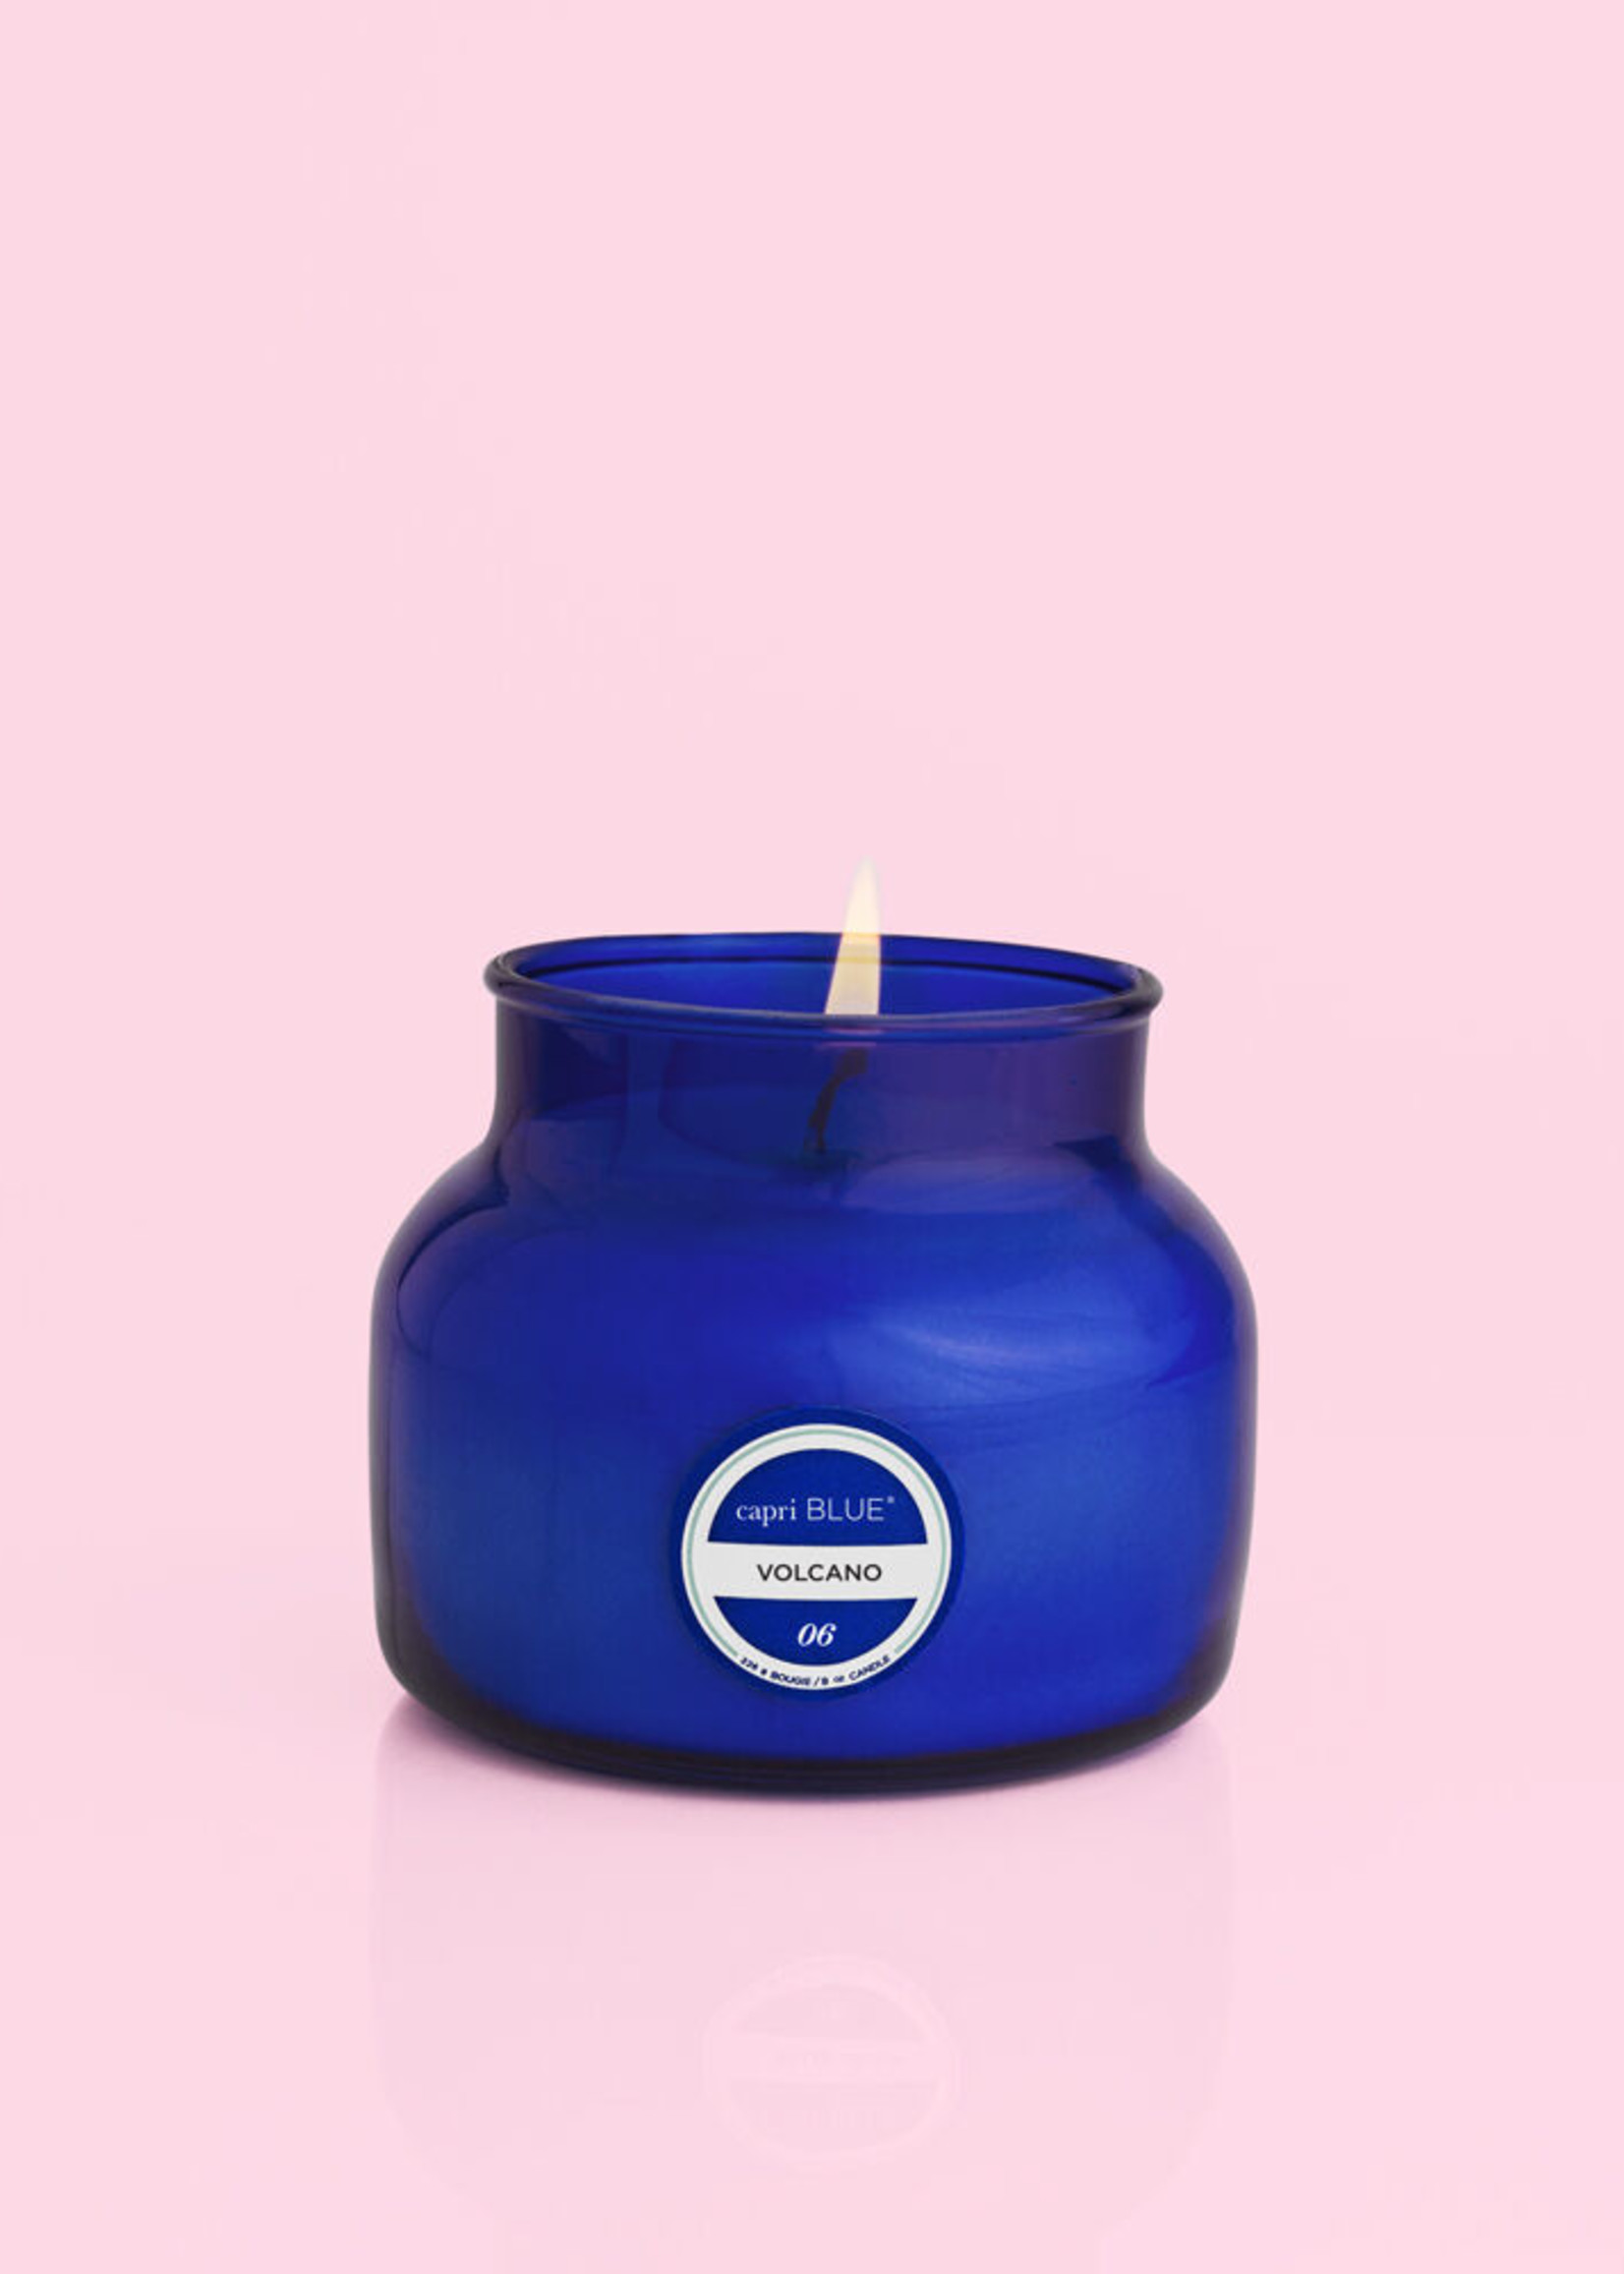 Capri Blue Volcano Signature Blue Petite Jar Candle 8oz